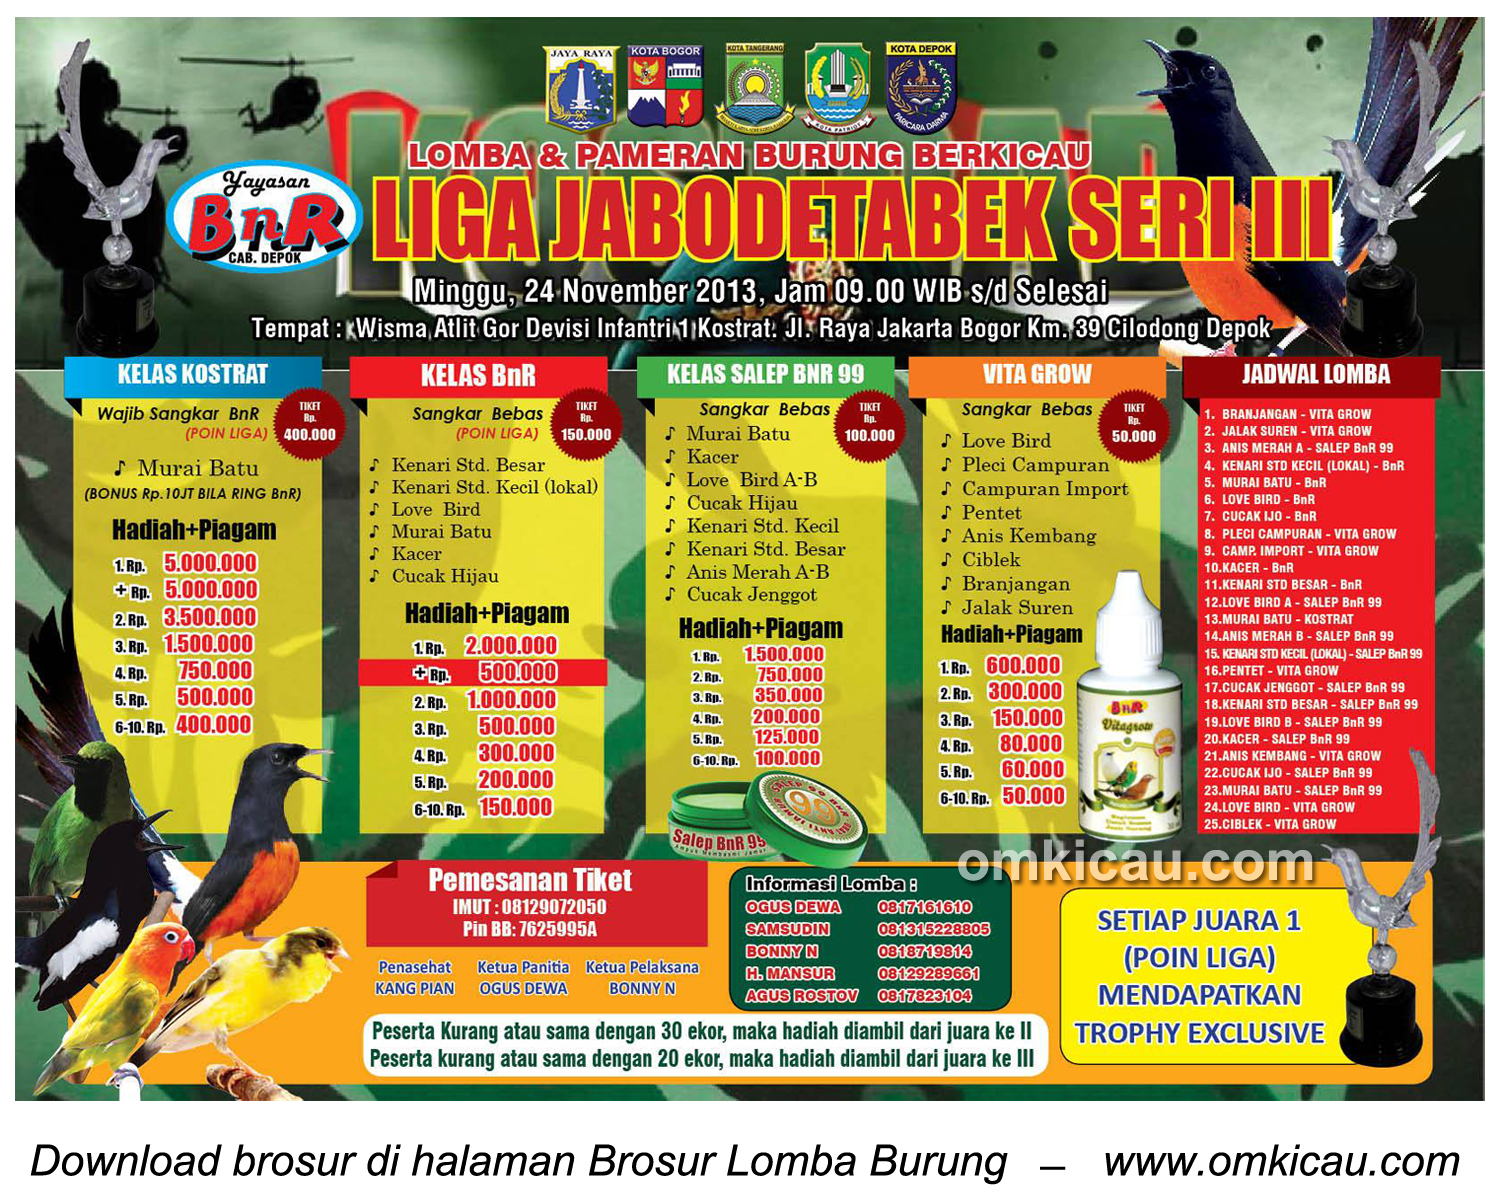 Brosur Lomba Burung Liga BnR Jabodetabek Seri 3, Depok, 24 November 2013